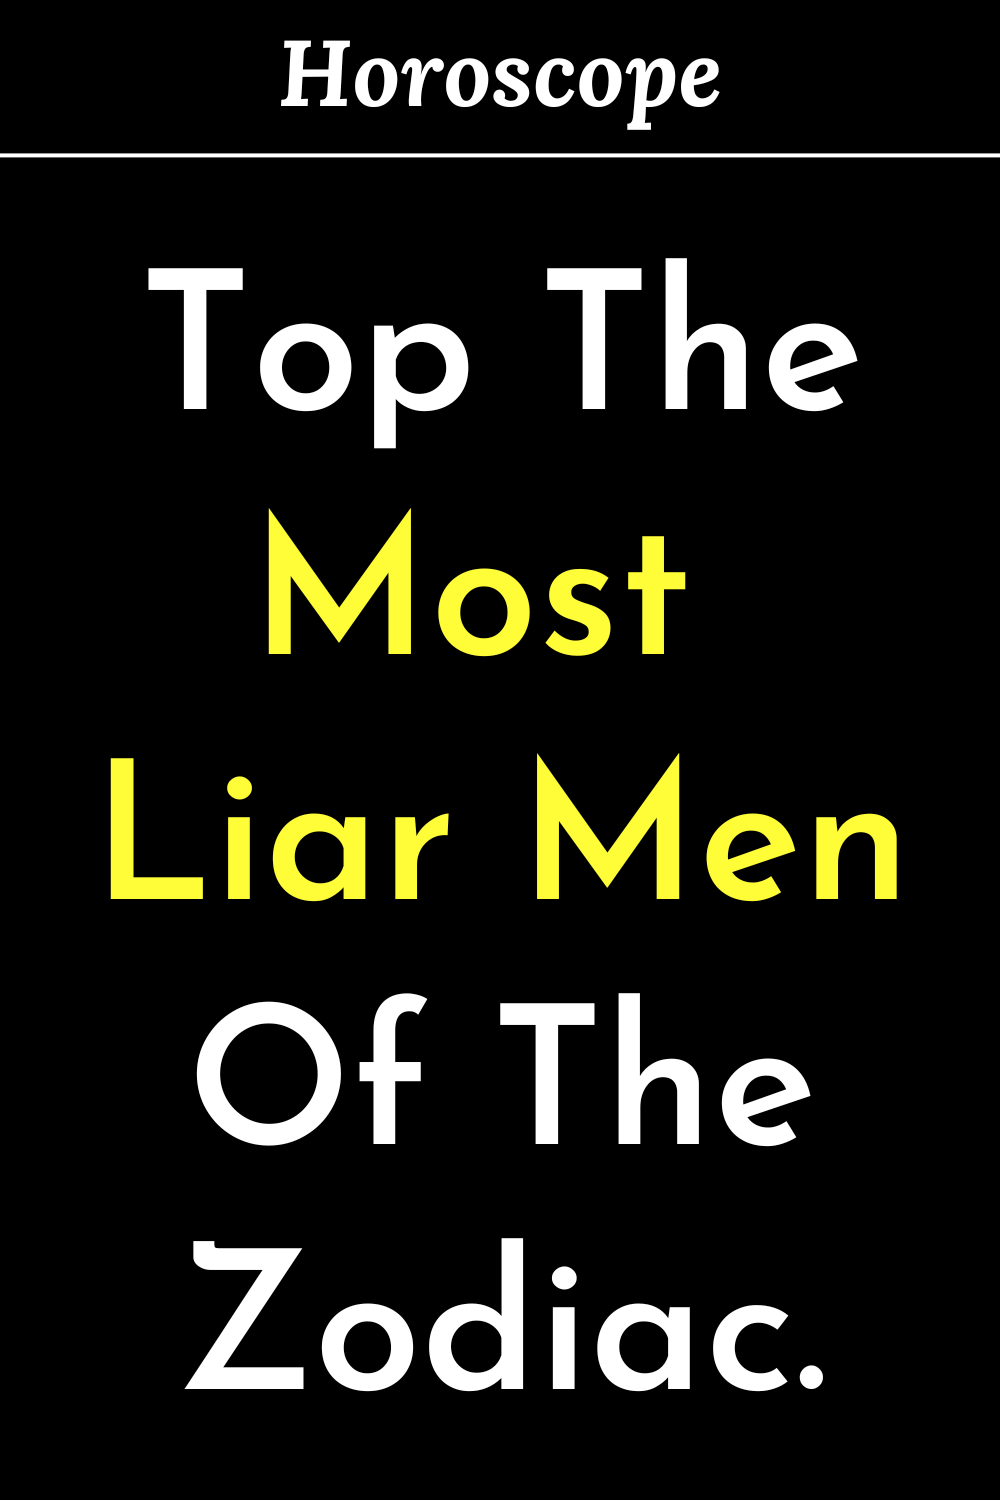 Top The Most Liar Men Of The Zodiac.